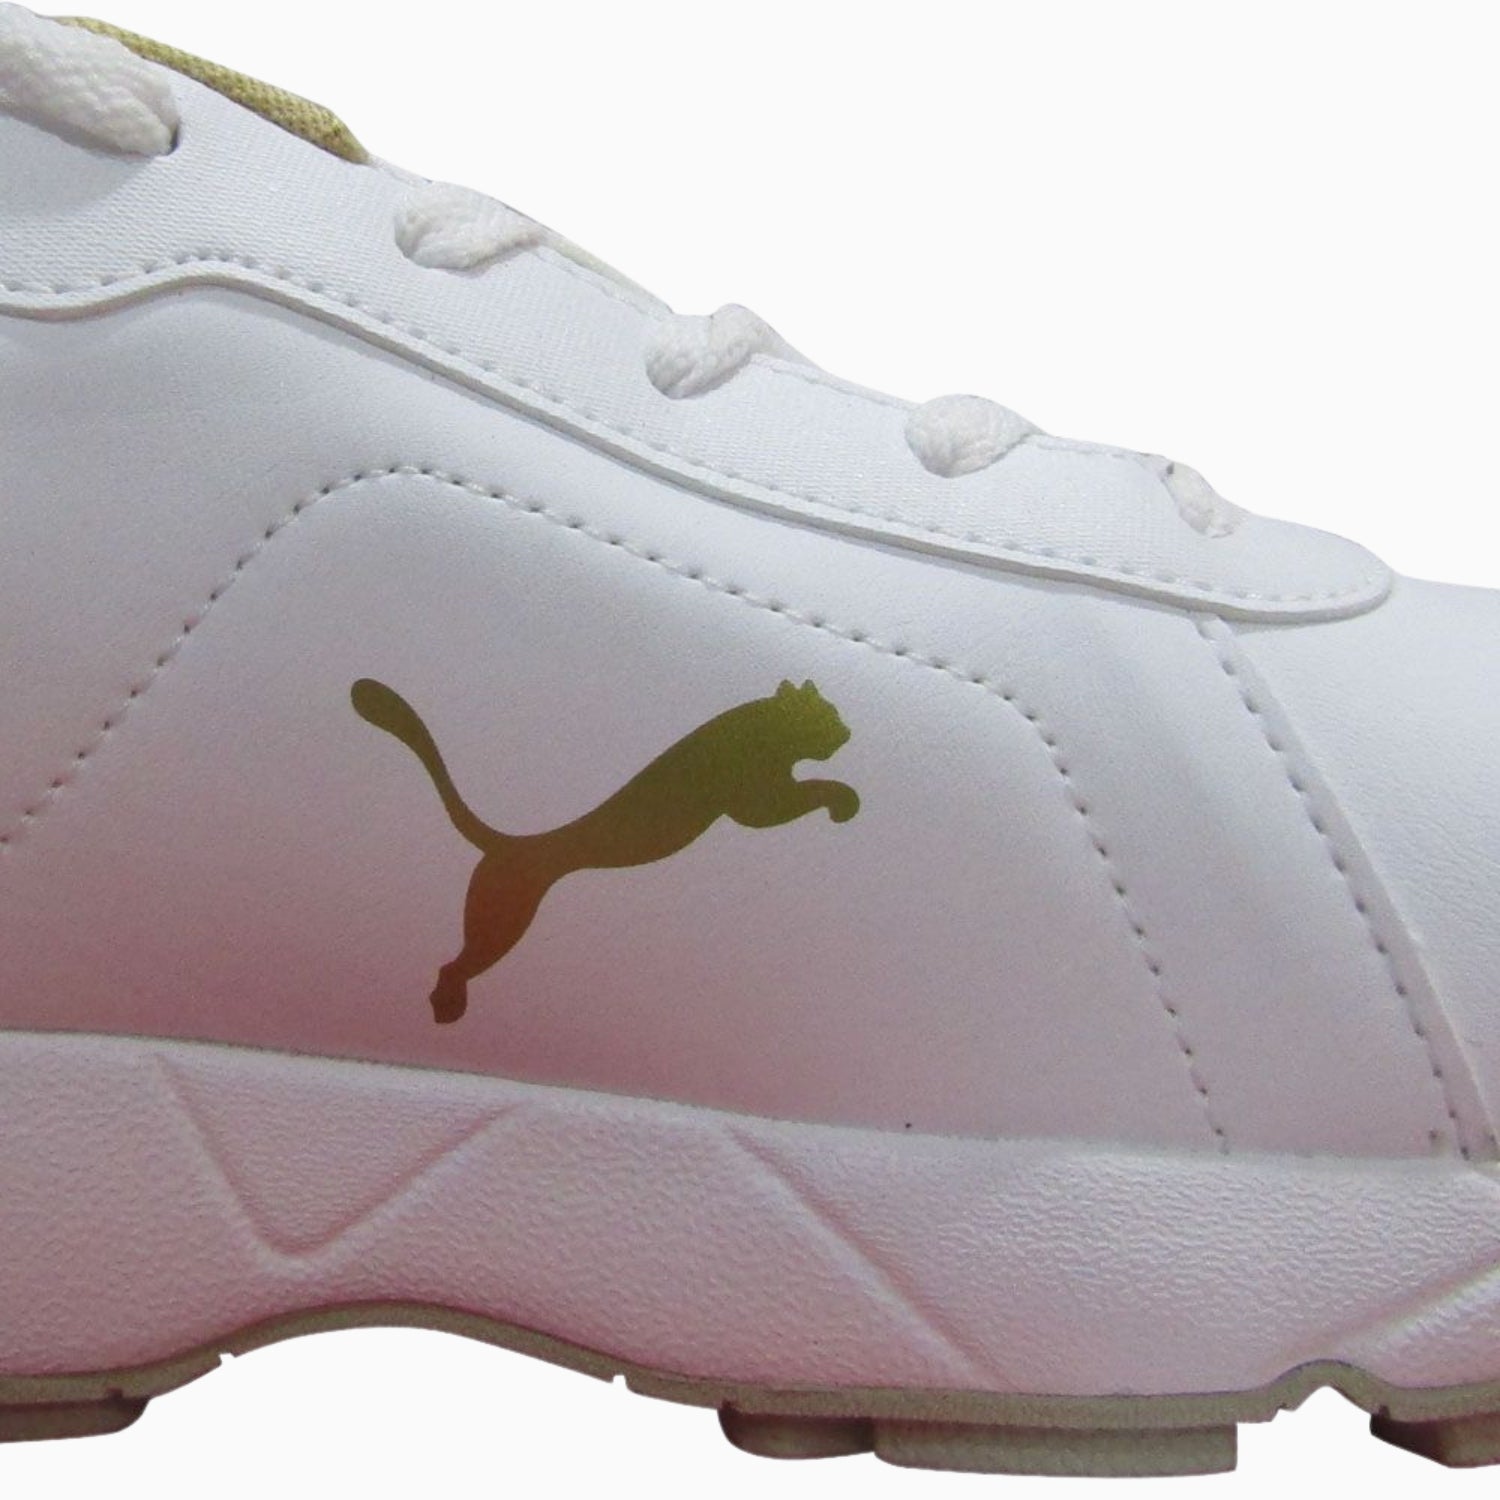 Puma Cricket Shoes, Model Classic Cat, White/Mettallic Gold